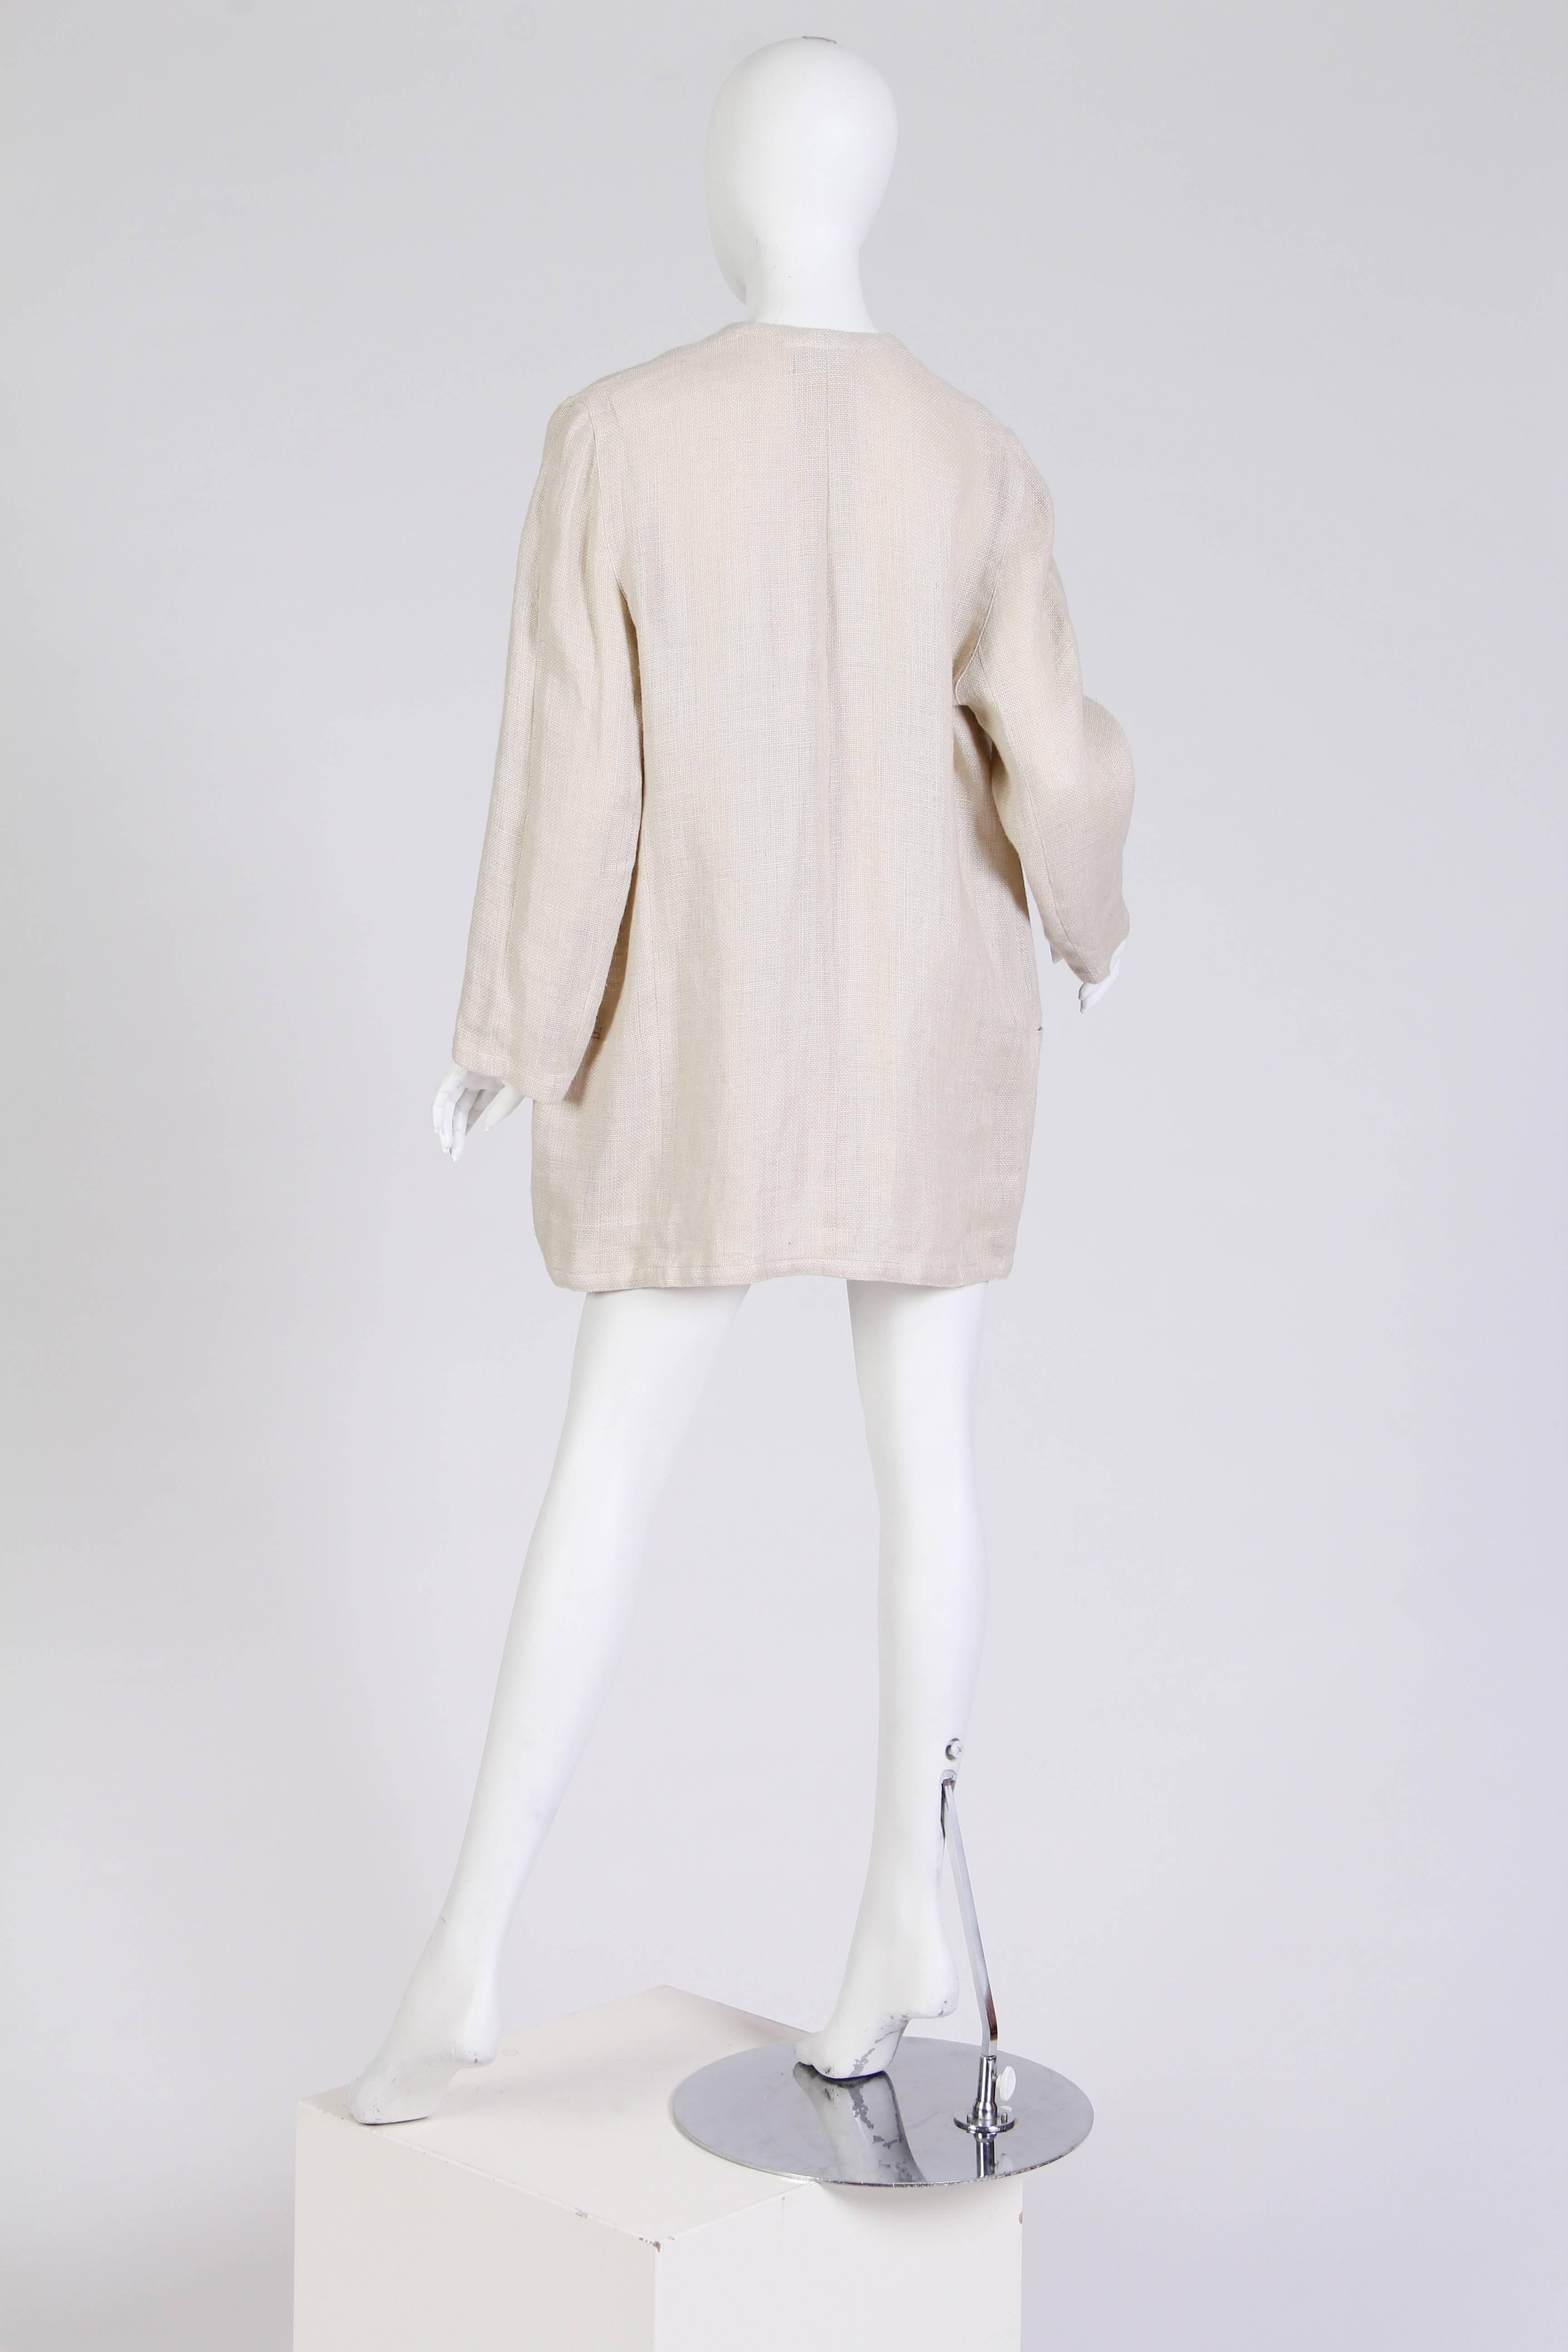 Women's Minimal Calvin Klein Jacket from the 1980s